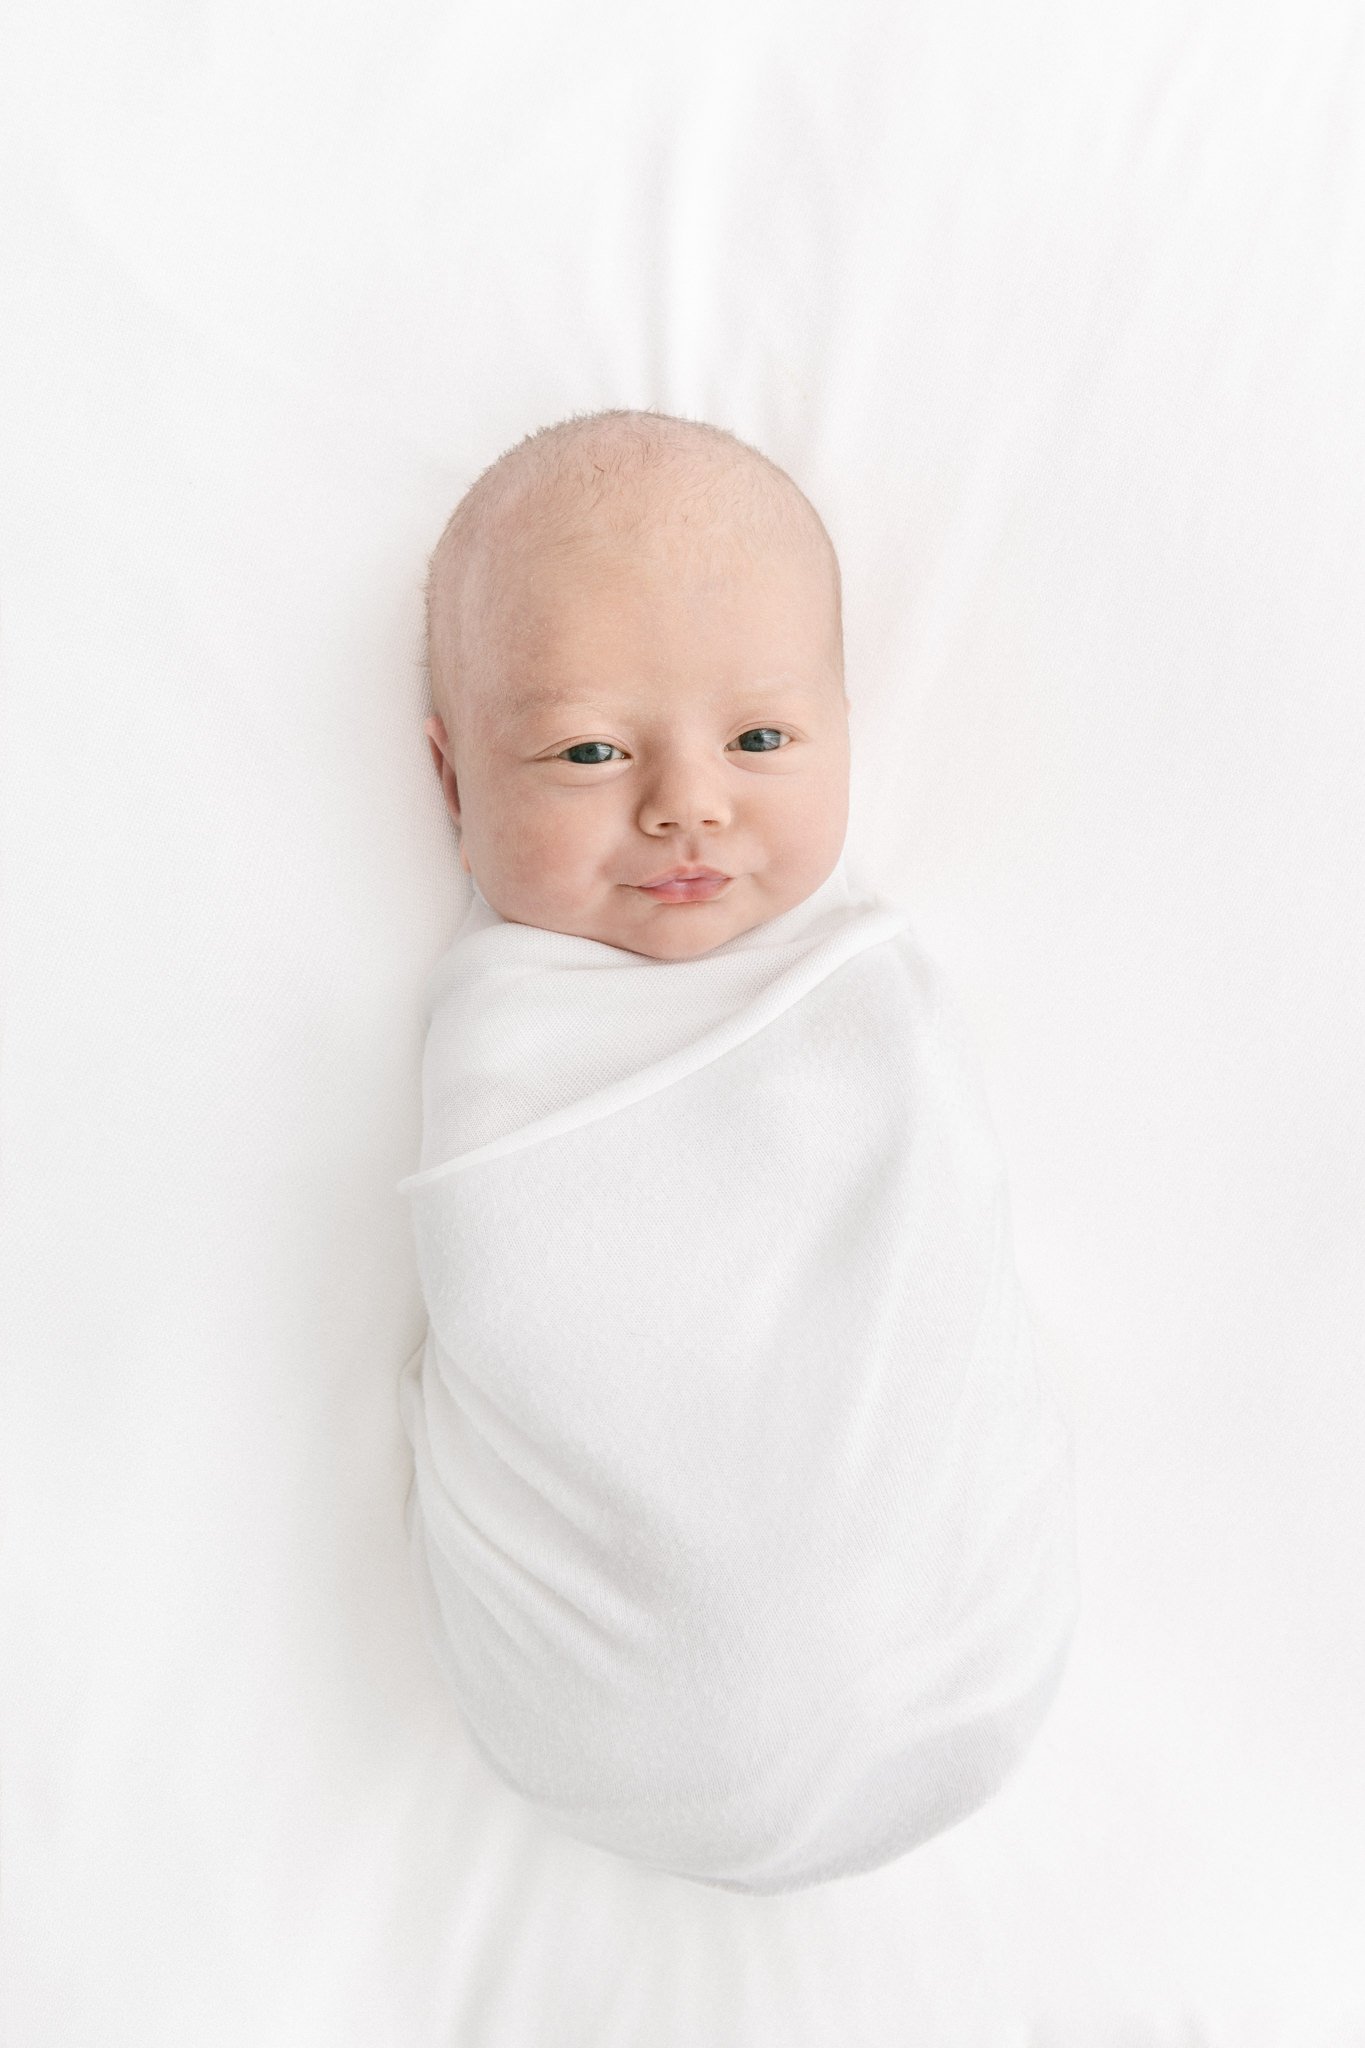  Studio newborn portrait by Professional Nicole Hawkins Photography in New Jersey. baby girl in all white baby blessing #NicoleHawkinsPhotography #NicoleHawkinsNewborns #StudioNewborn #StudioFamily #EastCoastNewbornPhotographer #NewJerseyNewborns #Ne